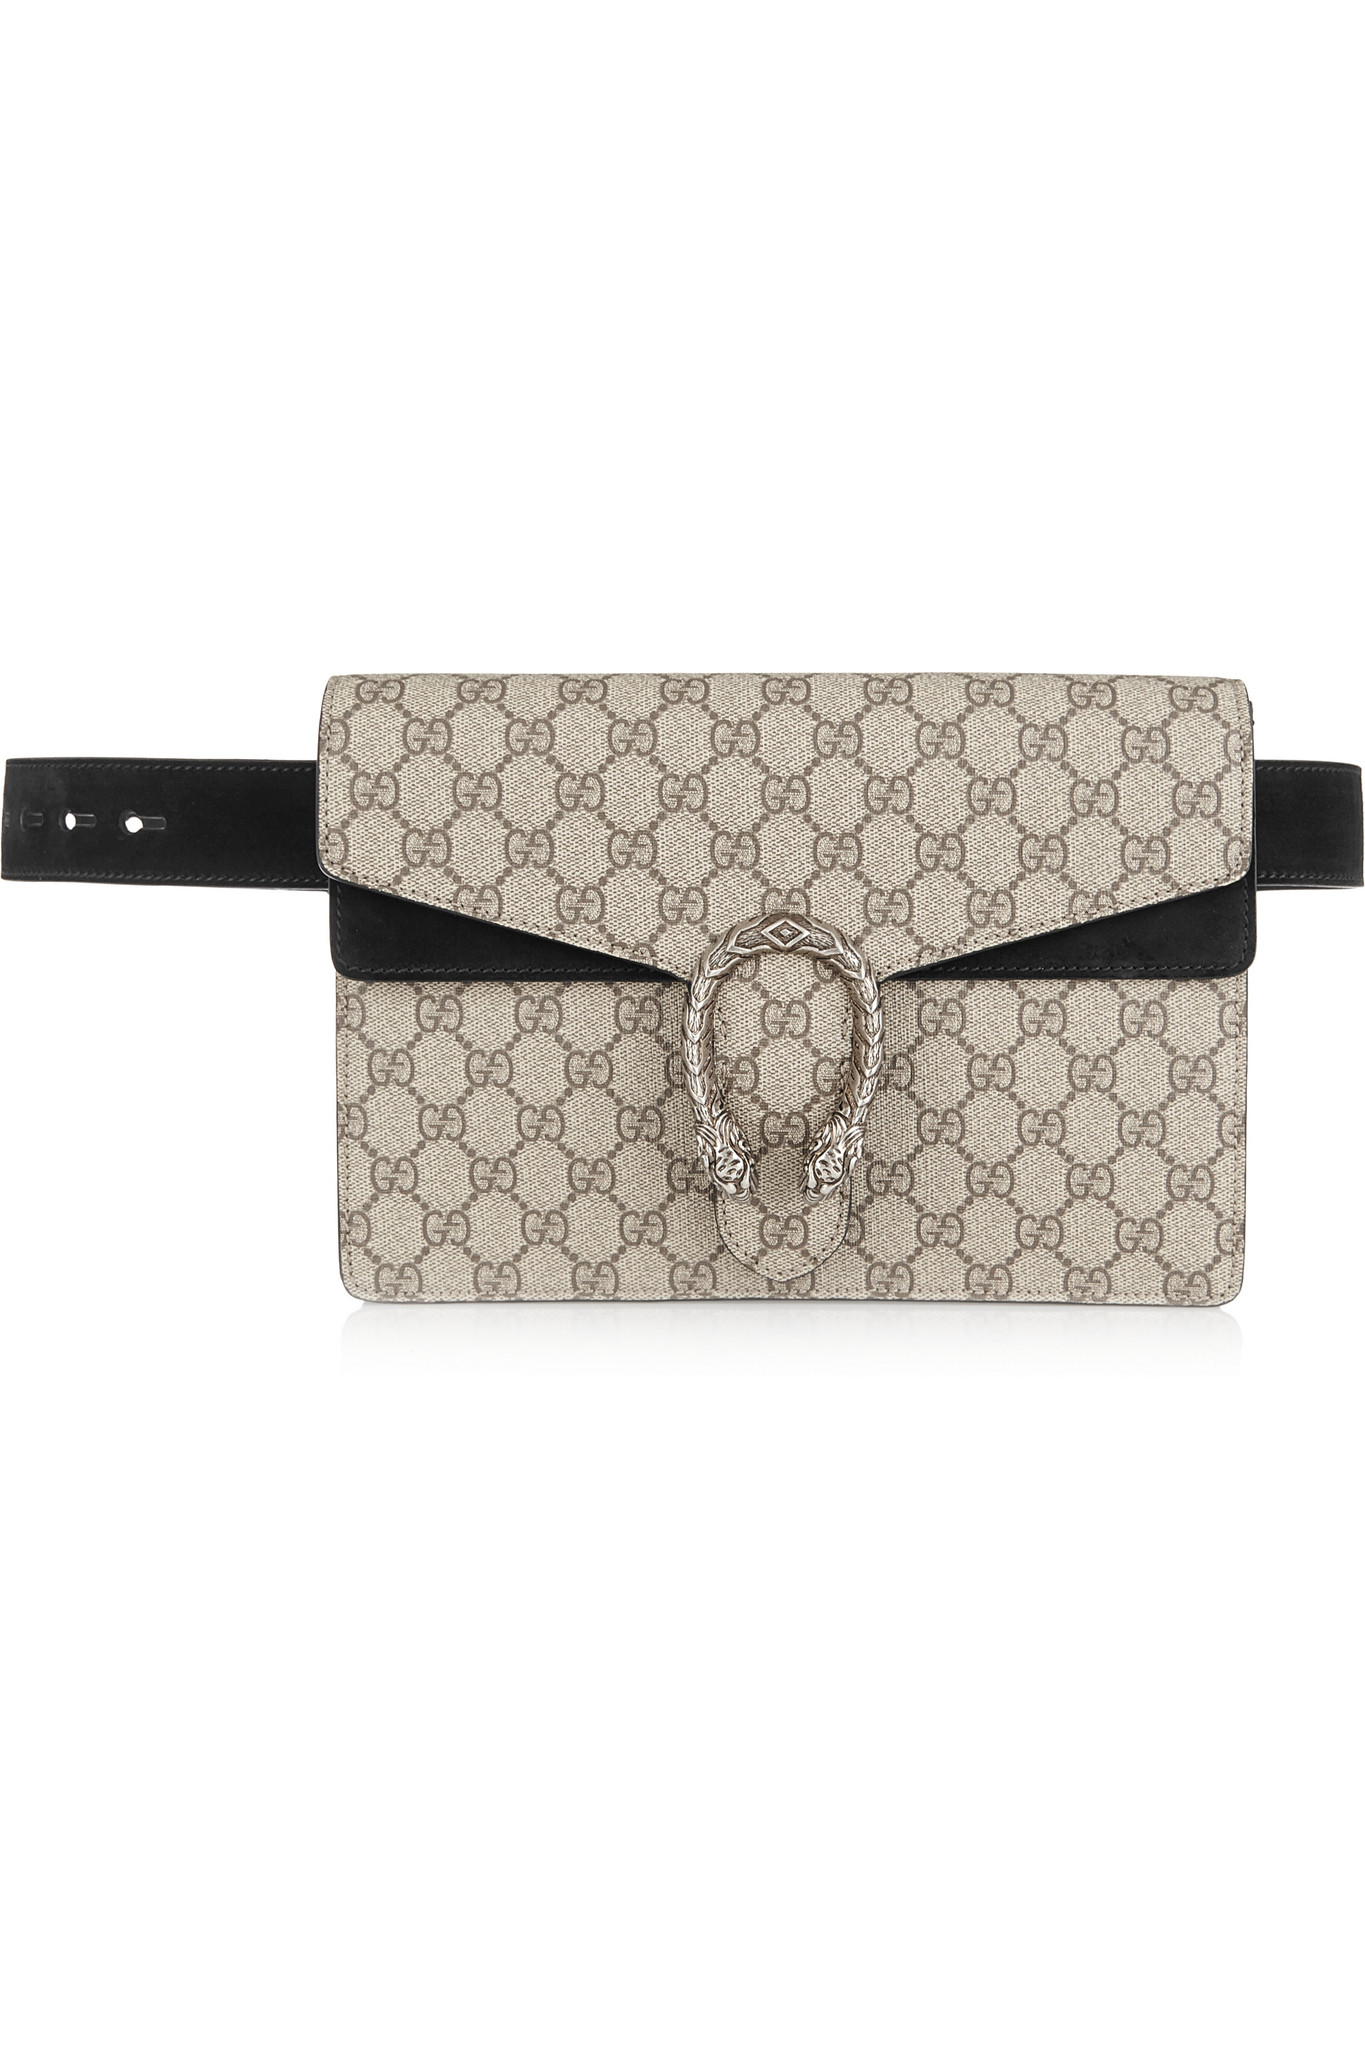 Gucci Dionysus GG Supreme Belt Bag in Natural | Lyst